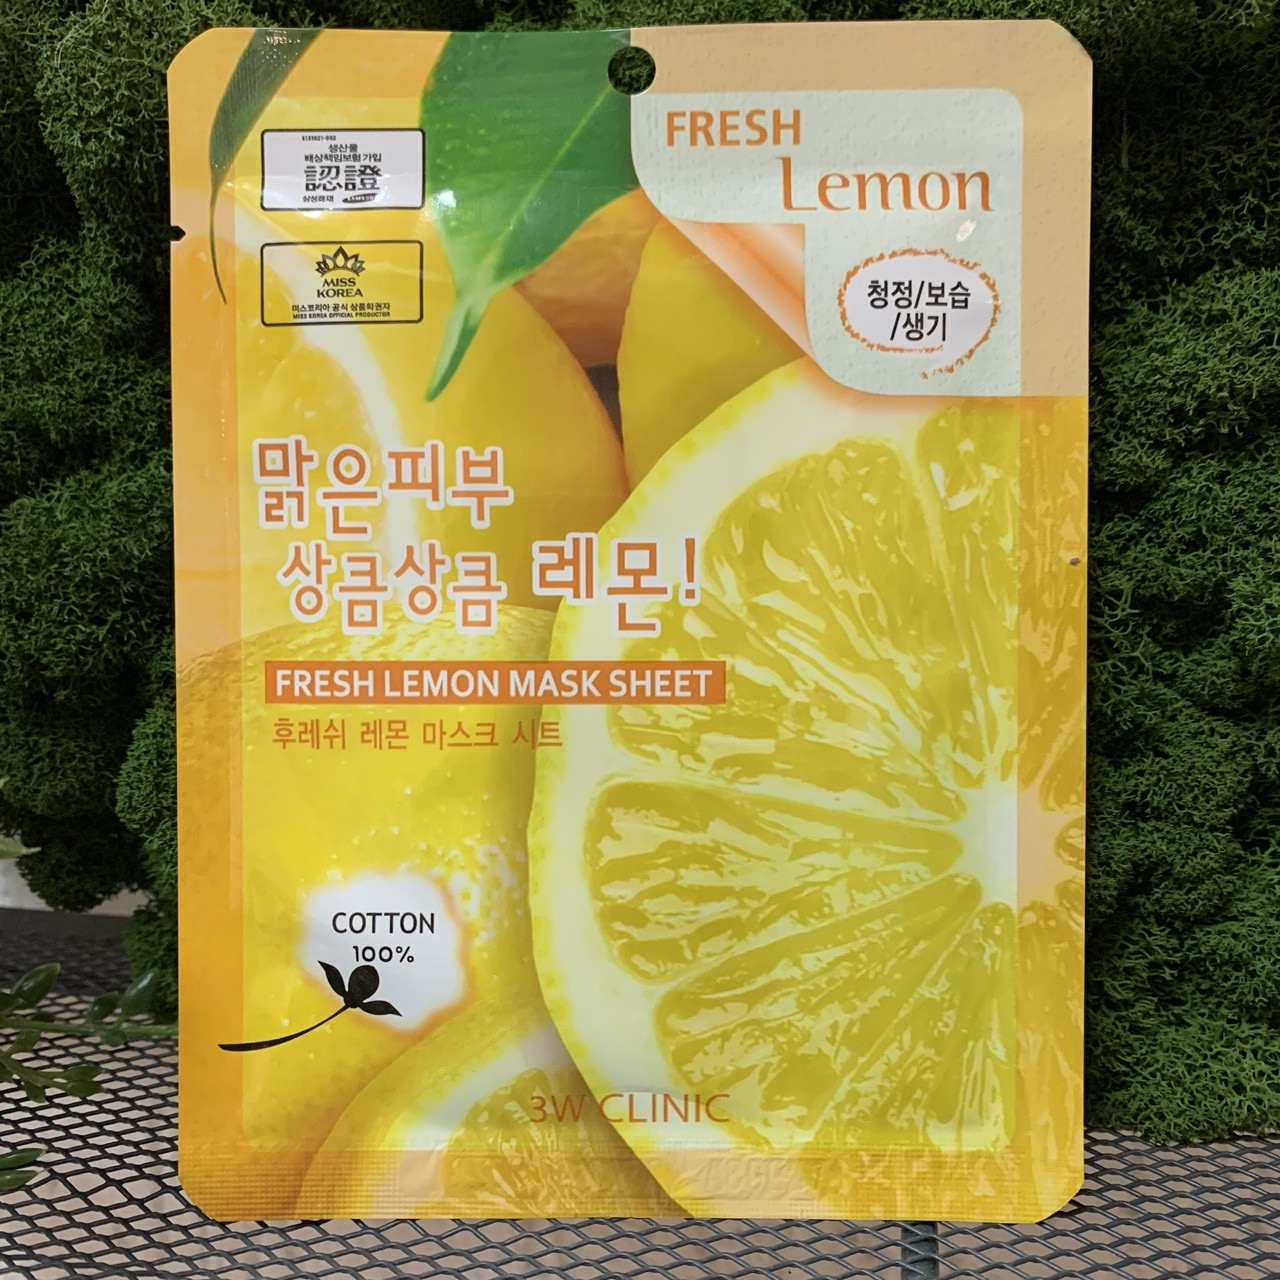 Тканевая маска для лица с экстрактом лимона 3W Clinic Fresh Lemon Mask Sheet